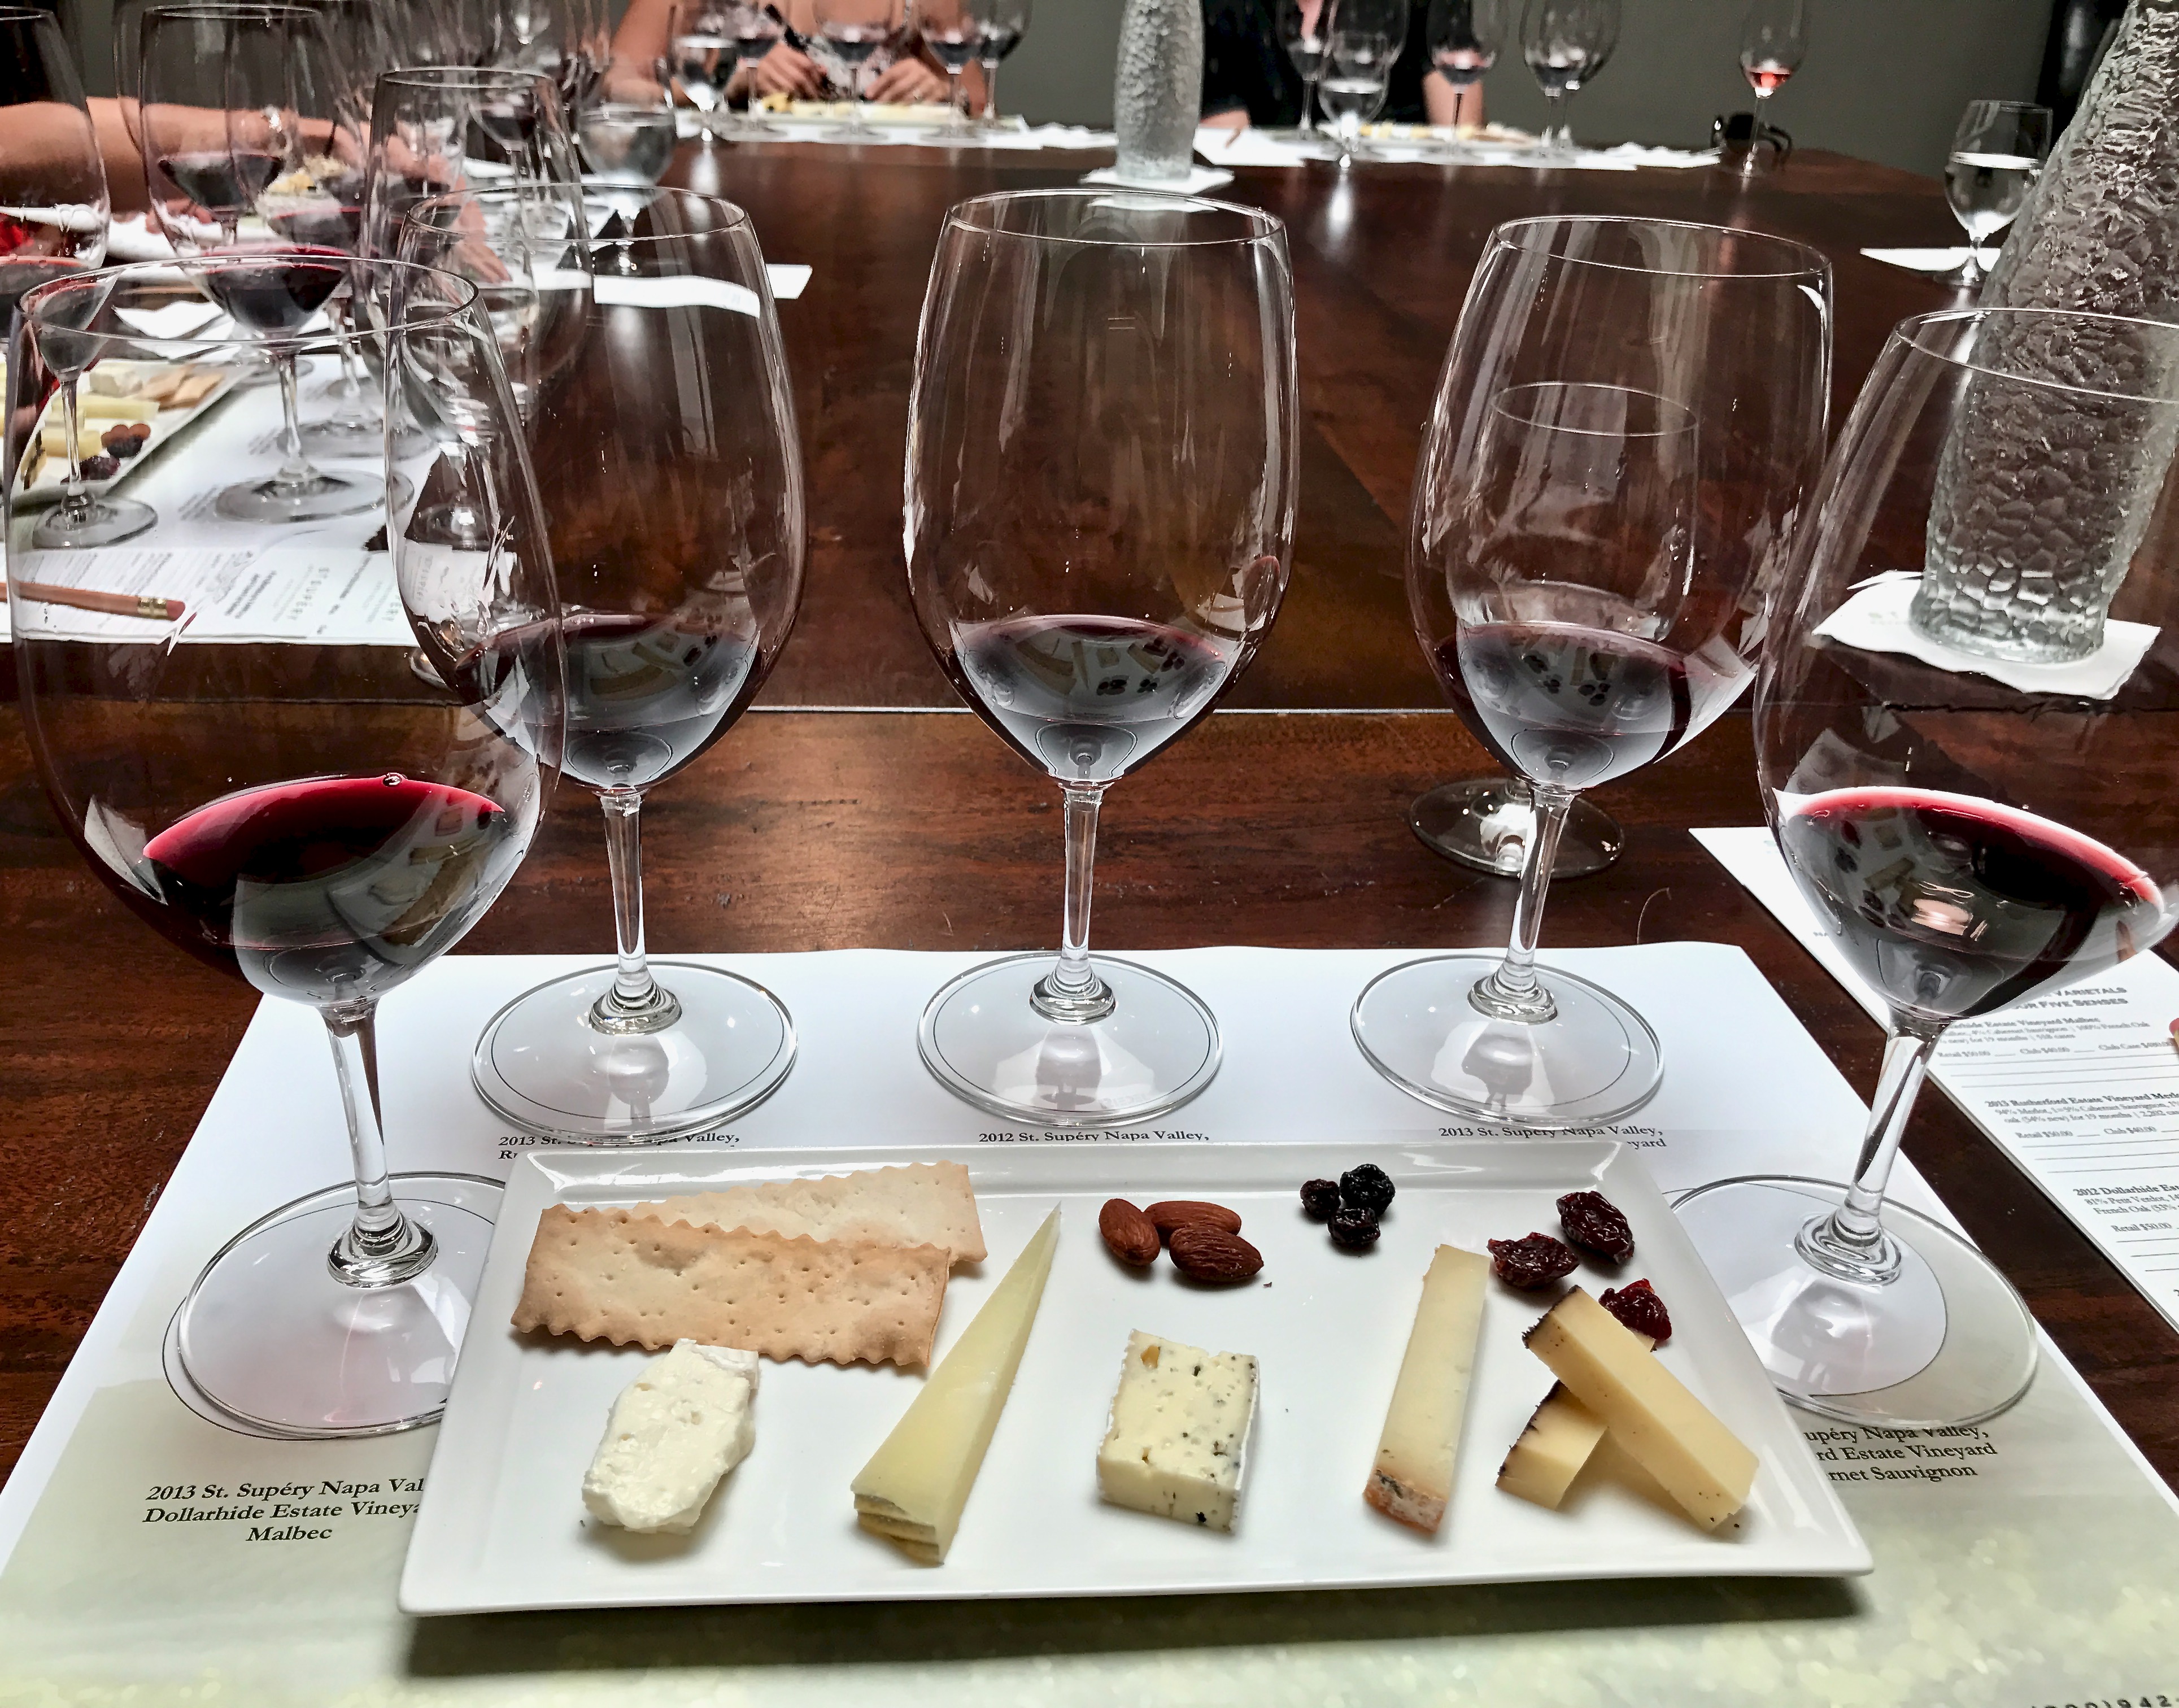 Wine Tasting Flight, Napa Valley Winery